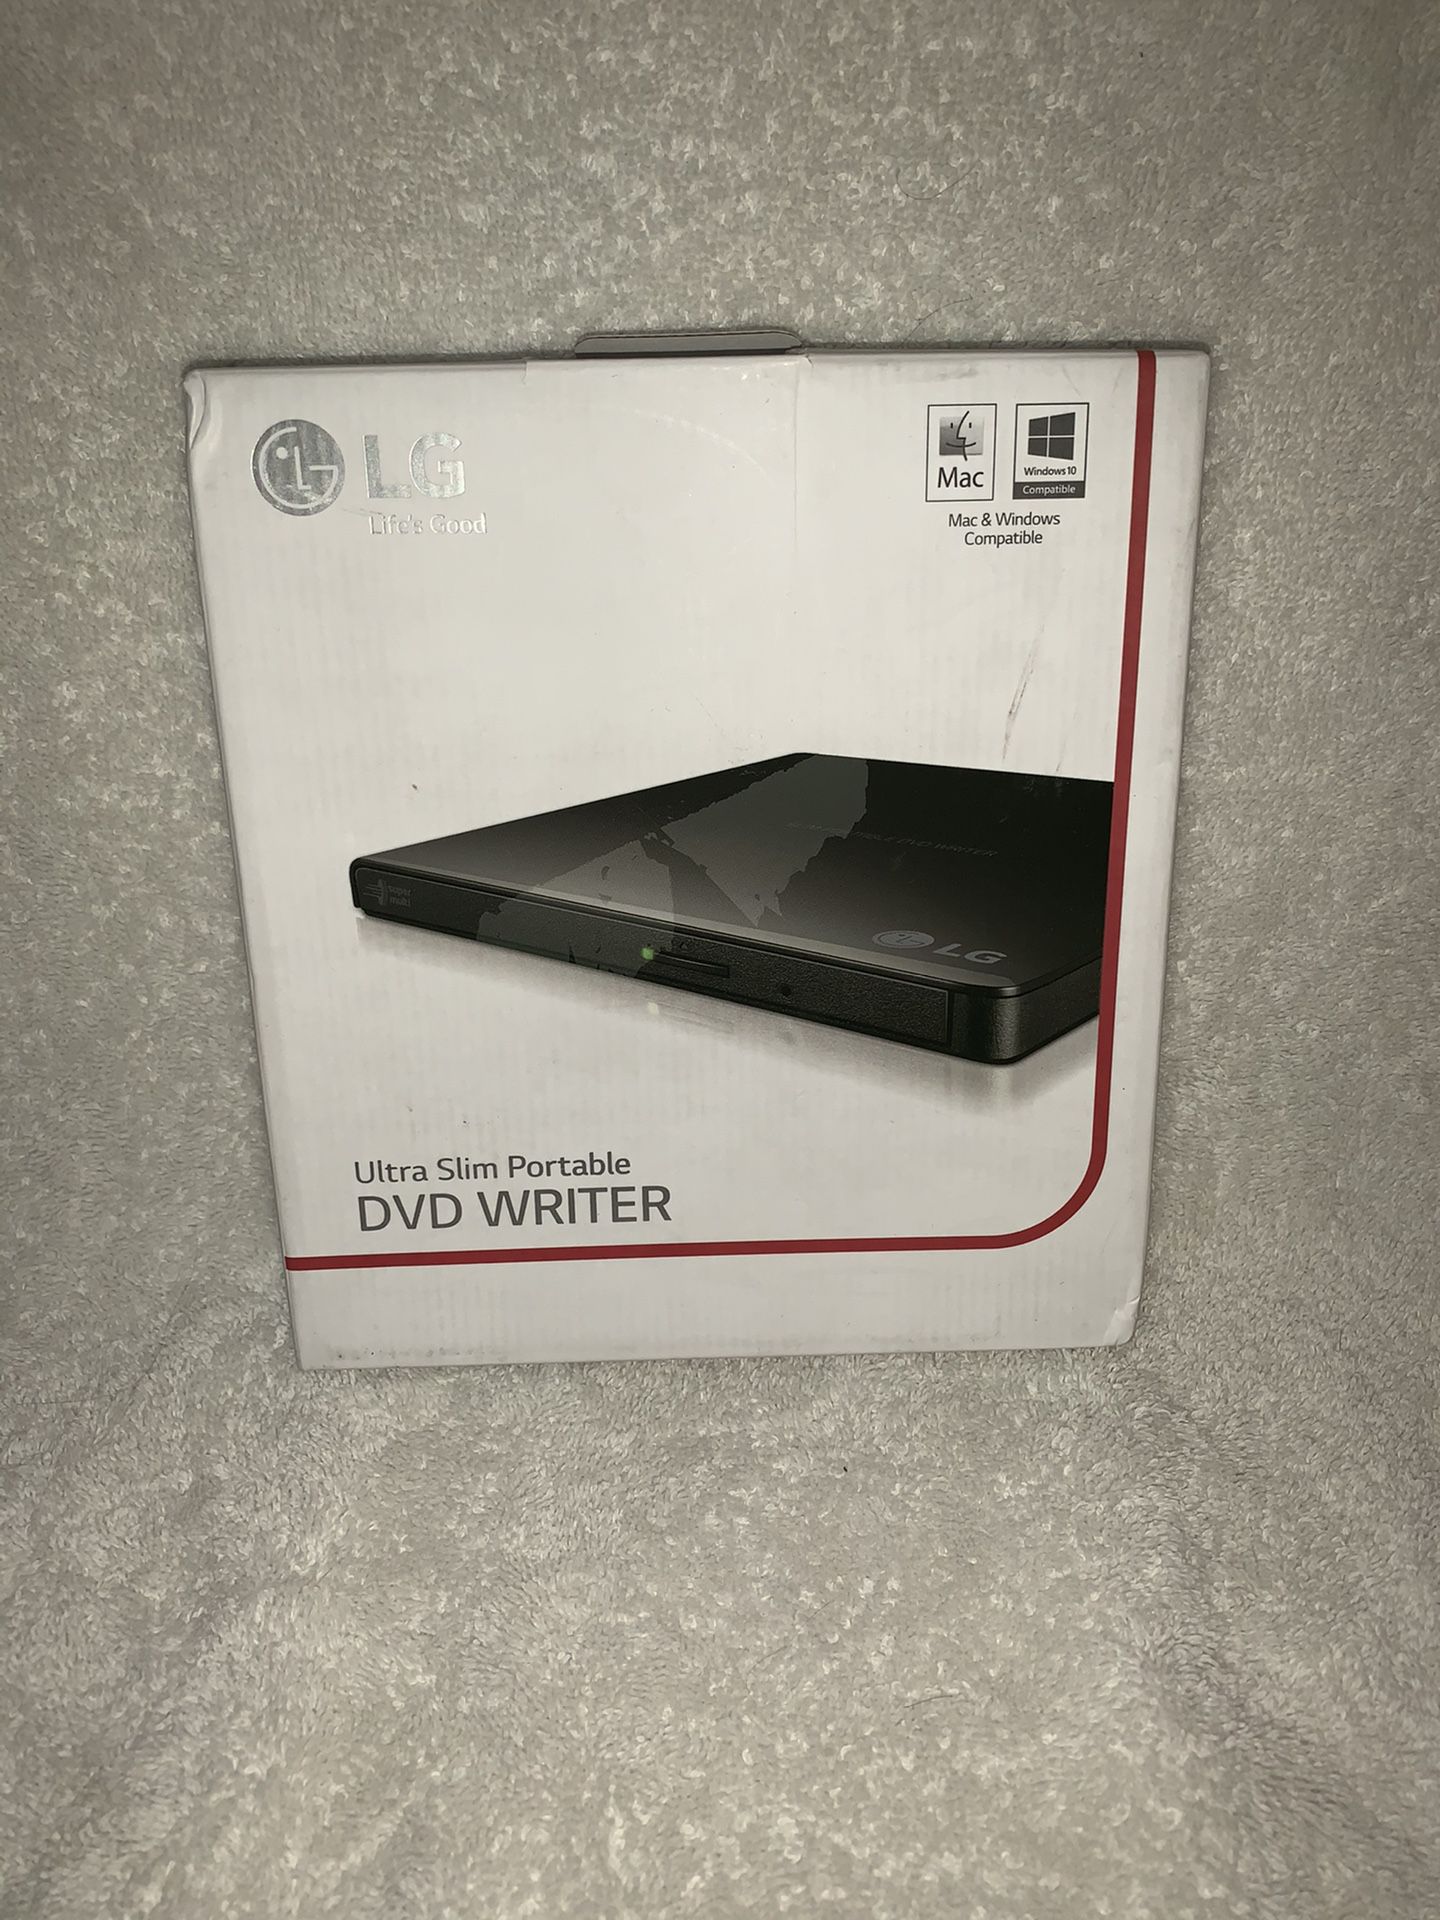 LG ULTRA SLIM PORTABLE DVD WRITER GP65 WINDOWS OR MAC COMPATIBLE